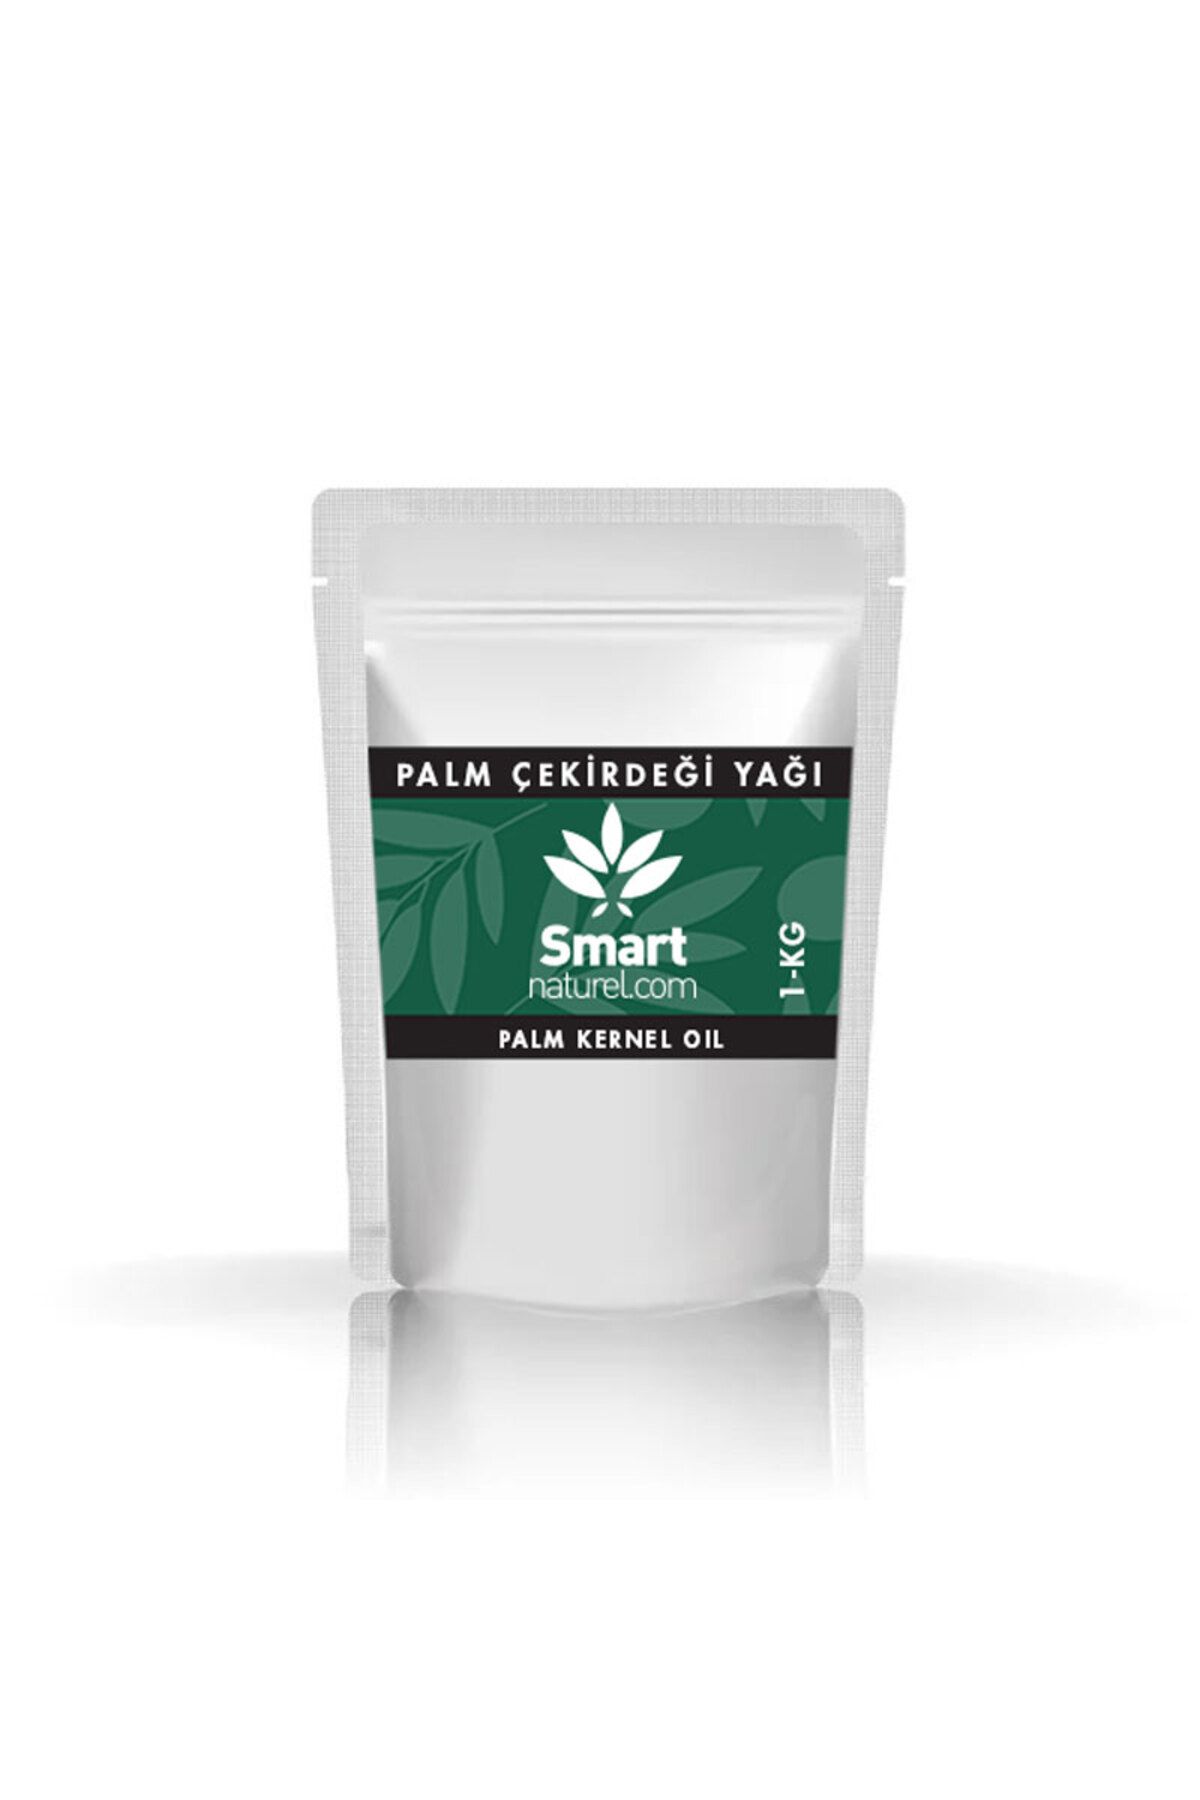 Smart Naturel Palm Çekirdeği Yağı - 1 kg | Elaeis Guineensis | Palm Kernel Oil